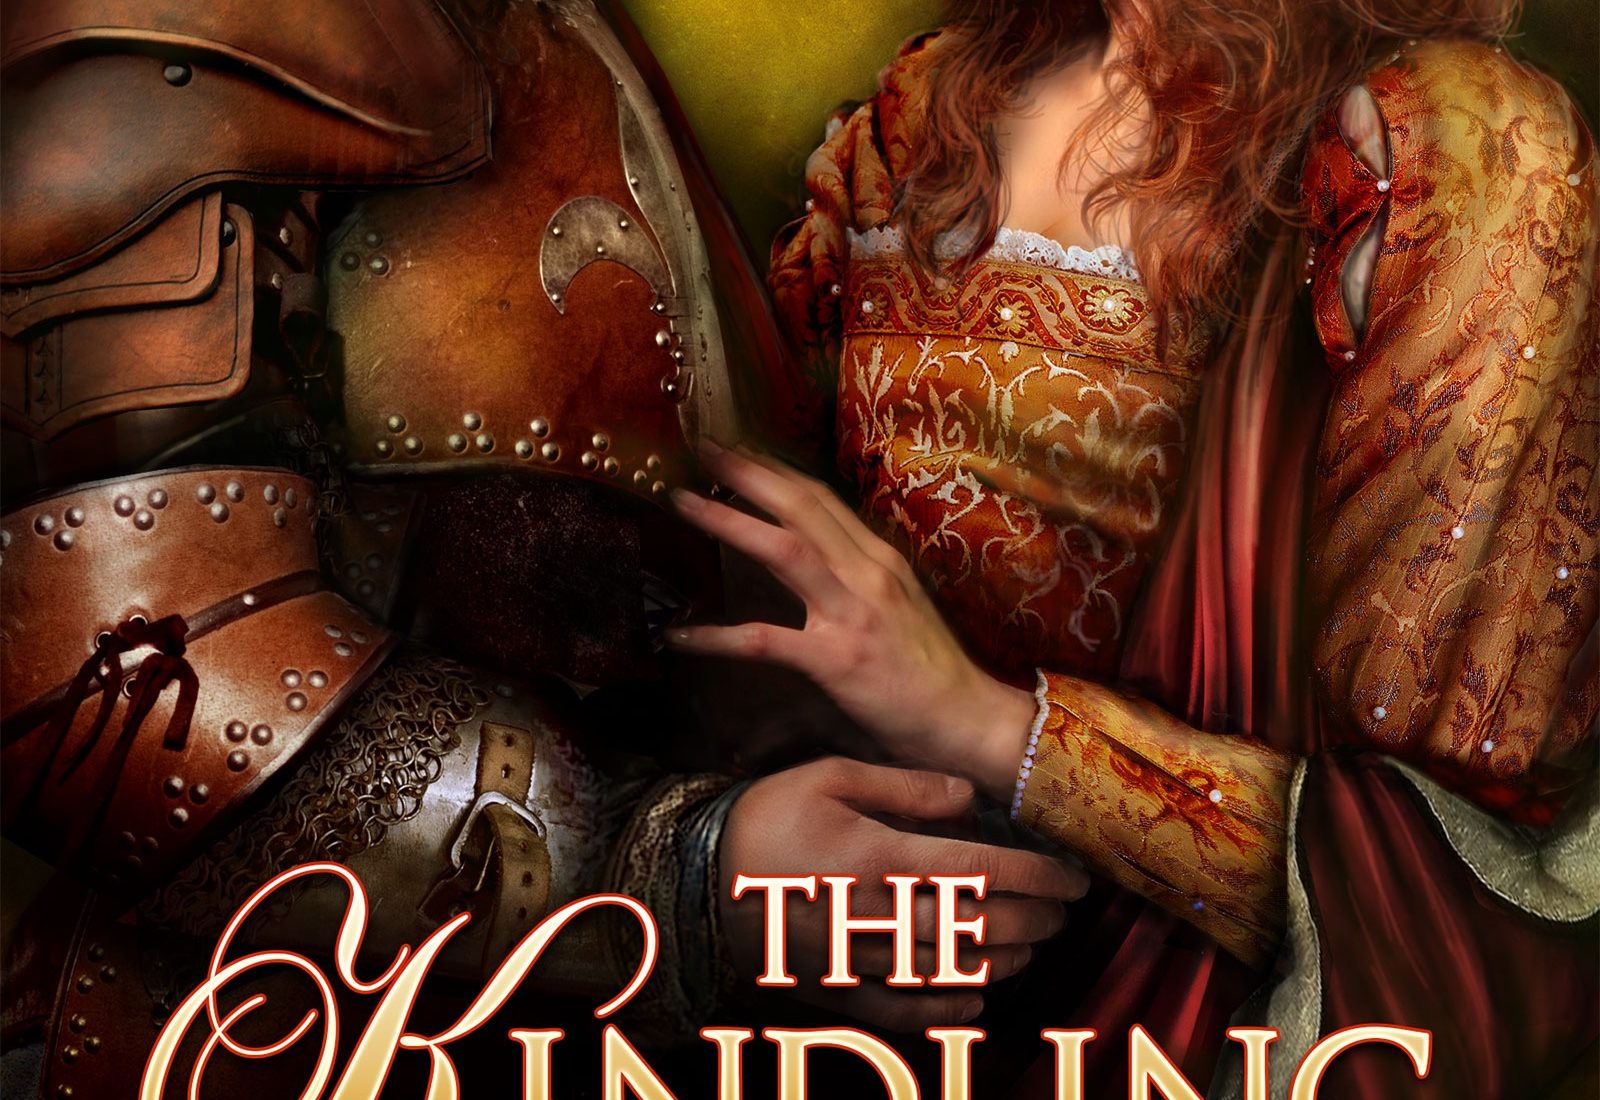 kindling_ebook, medieval romance